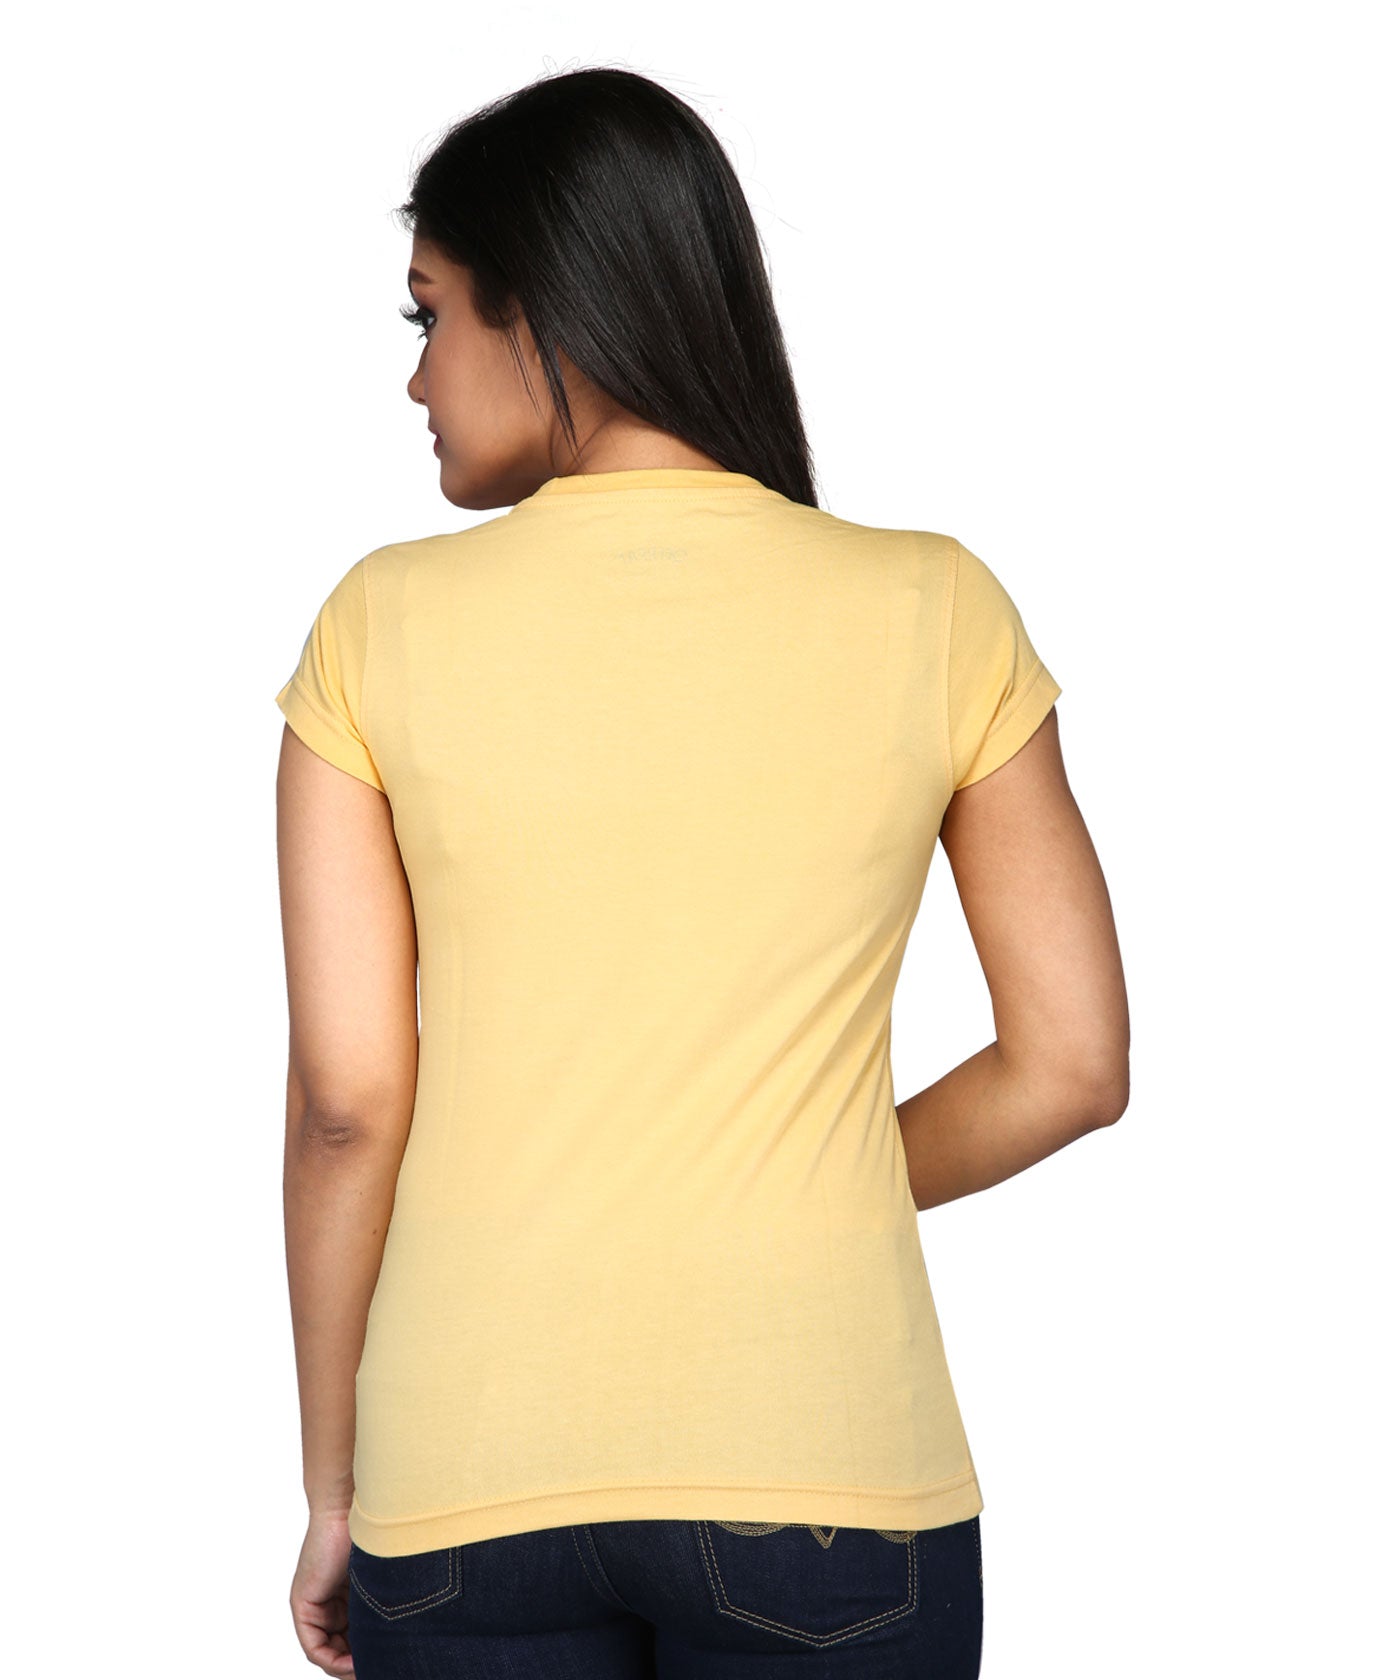 Work Hard Dream Big - Block Print Tees for Women - Golden Yellow